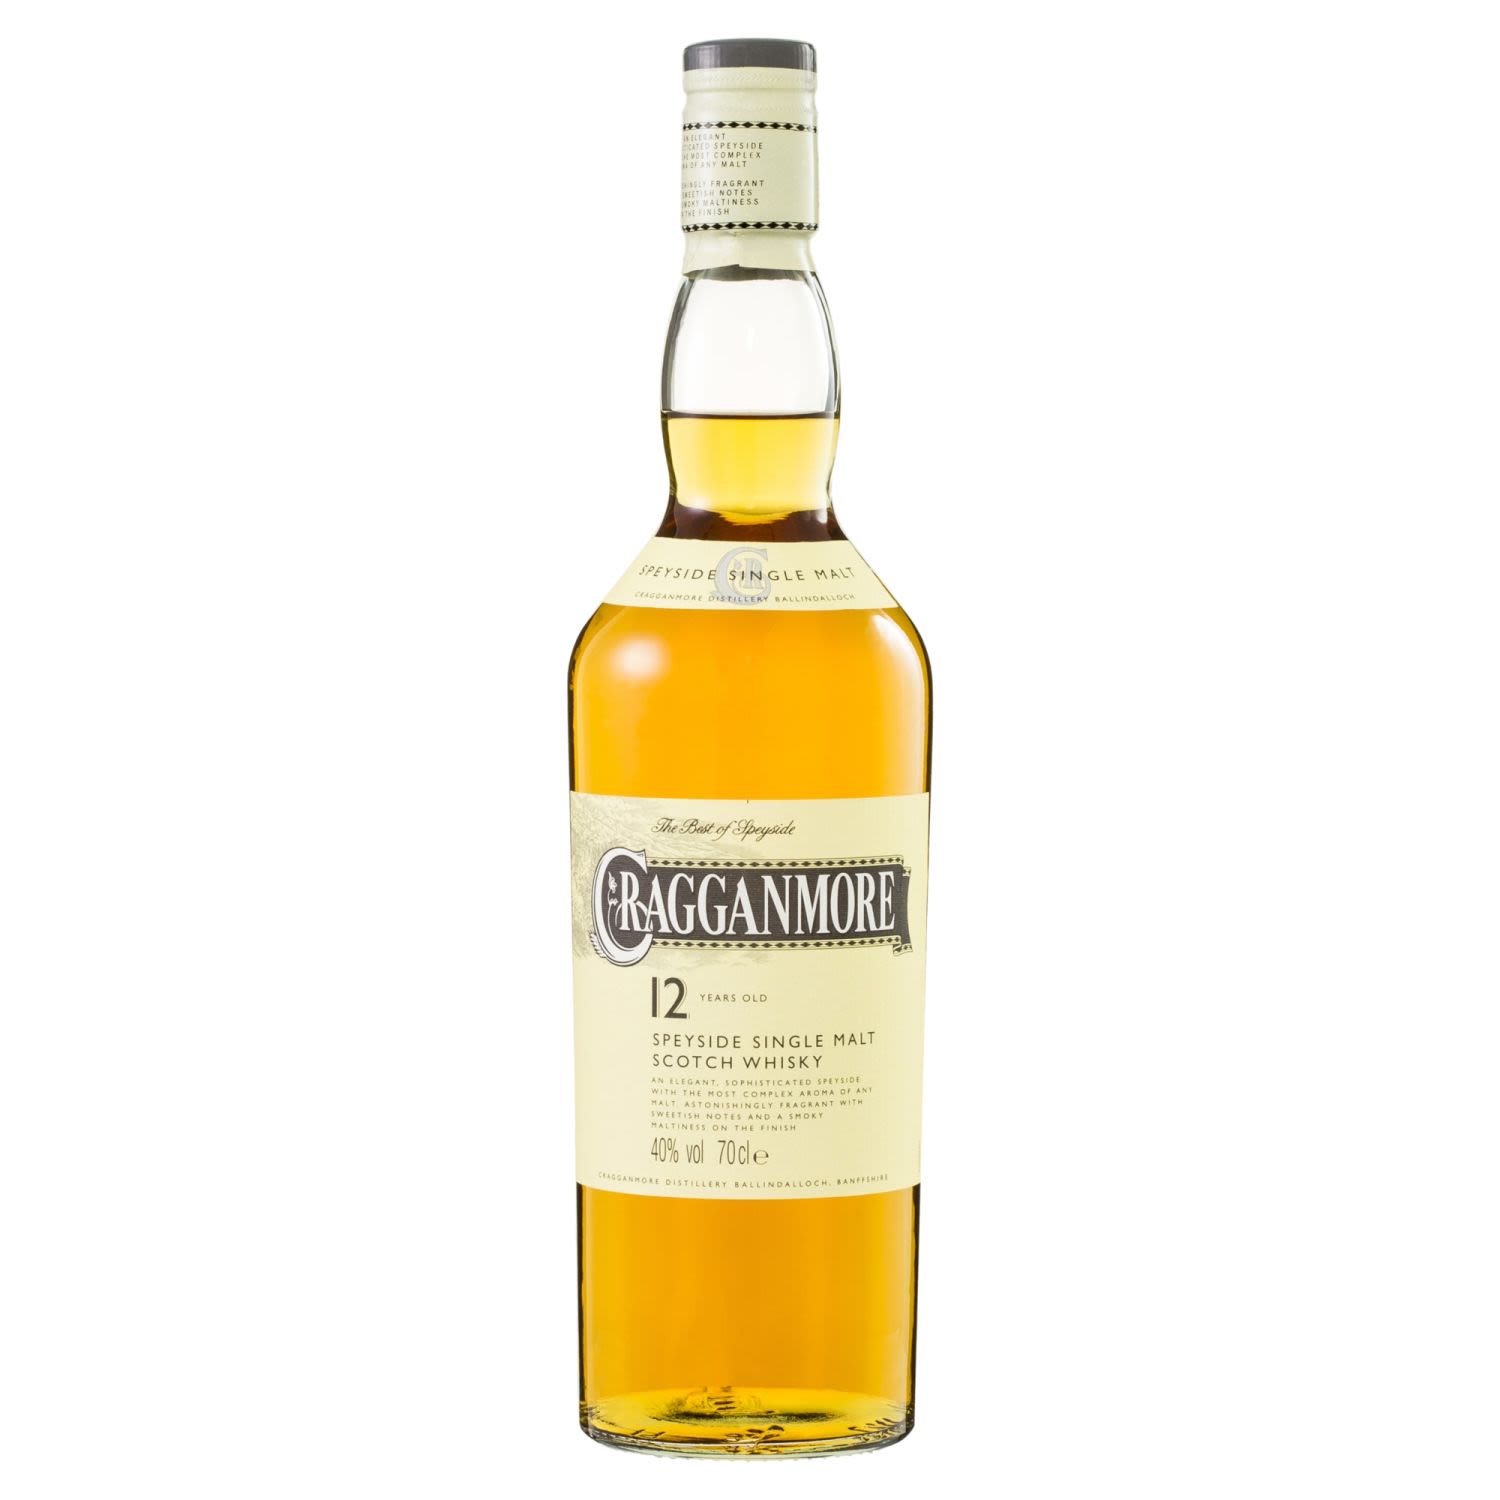 Cragganmore 12 Year Old Speyside Single Malt Scotch Whisky 700mL Bottle